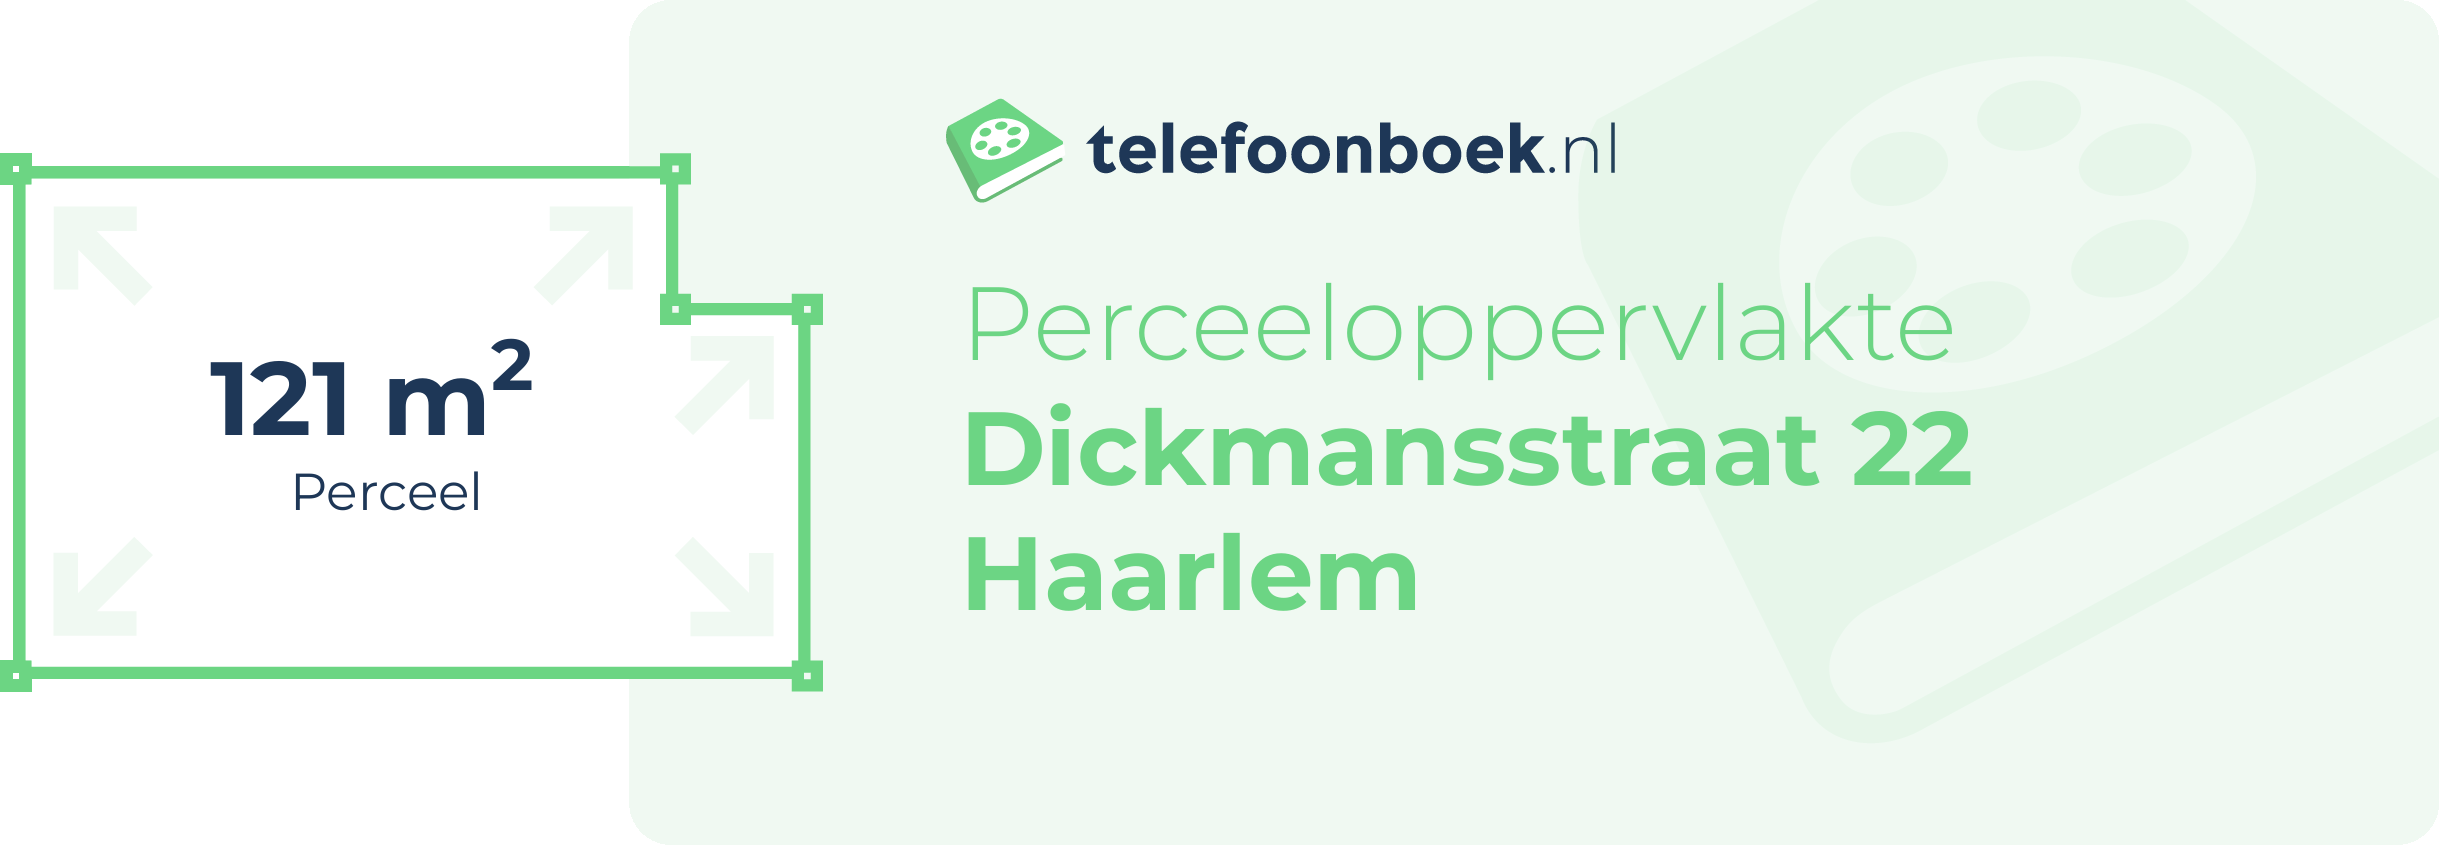 Perceeloppervlakte Dickmansstraat 22 Haarlem